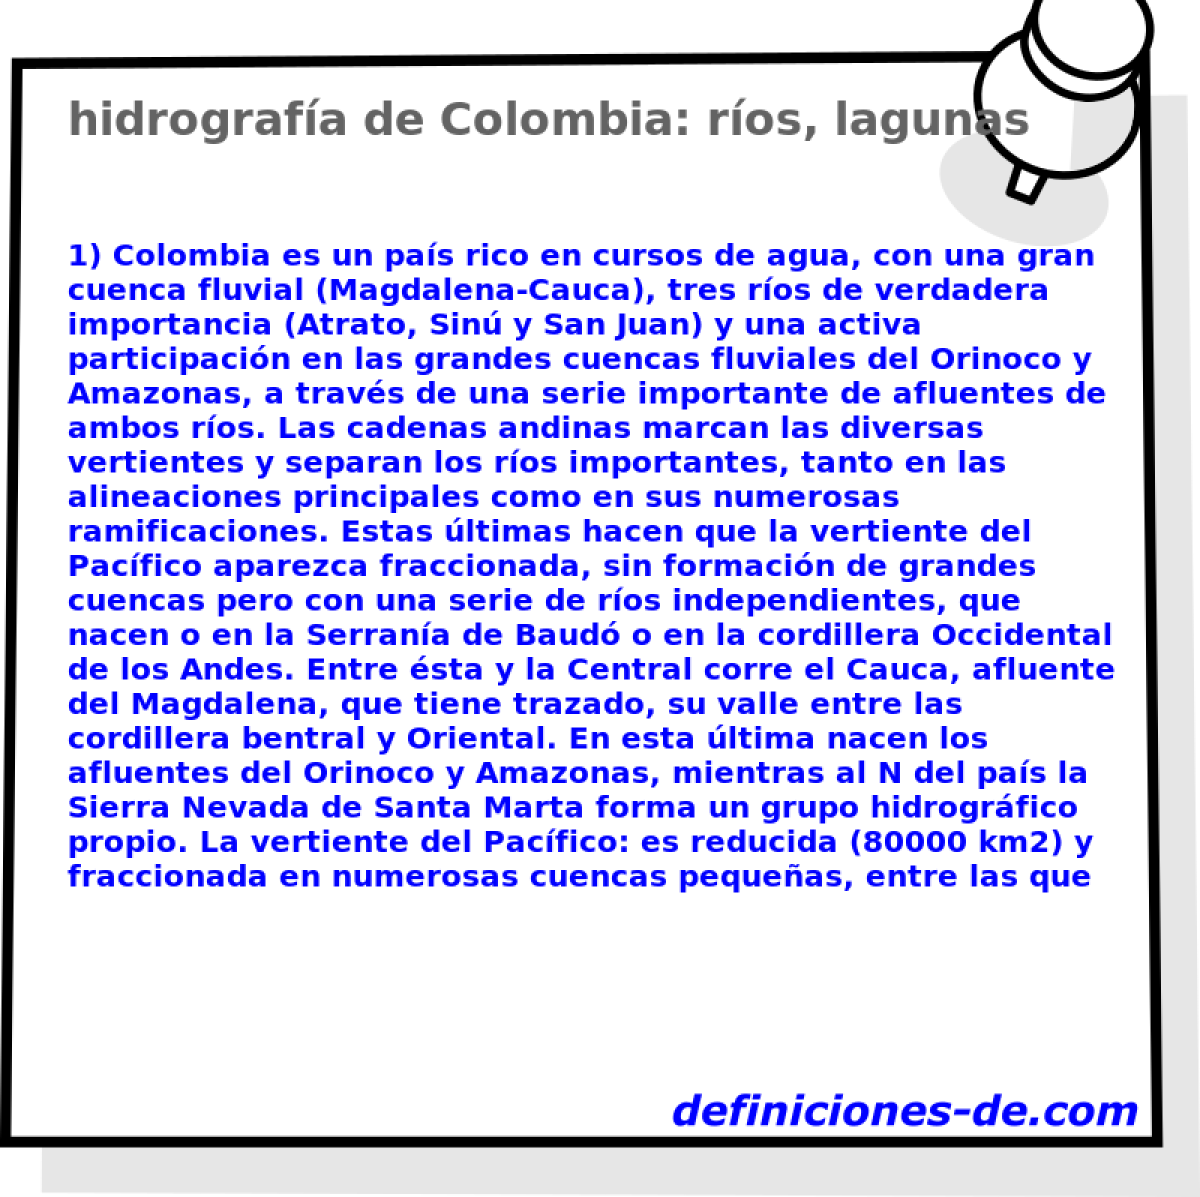 hidrografa de Colombia: ros, lagunas 